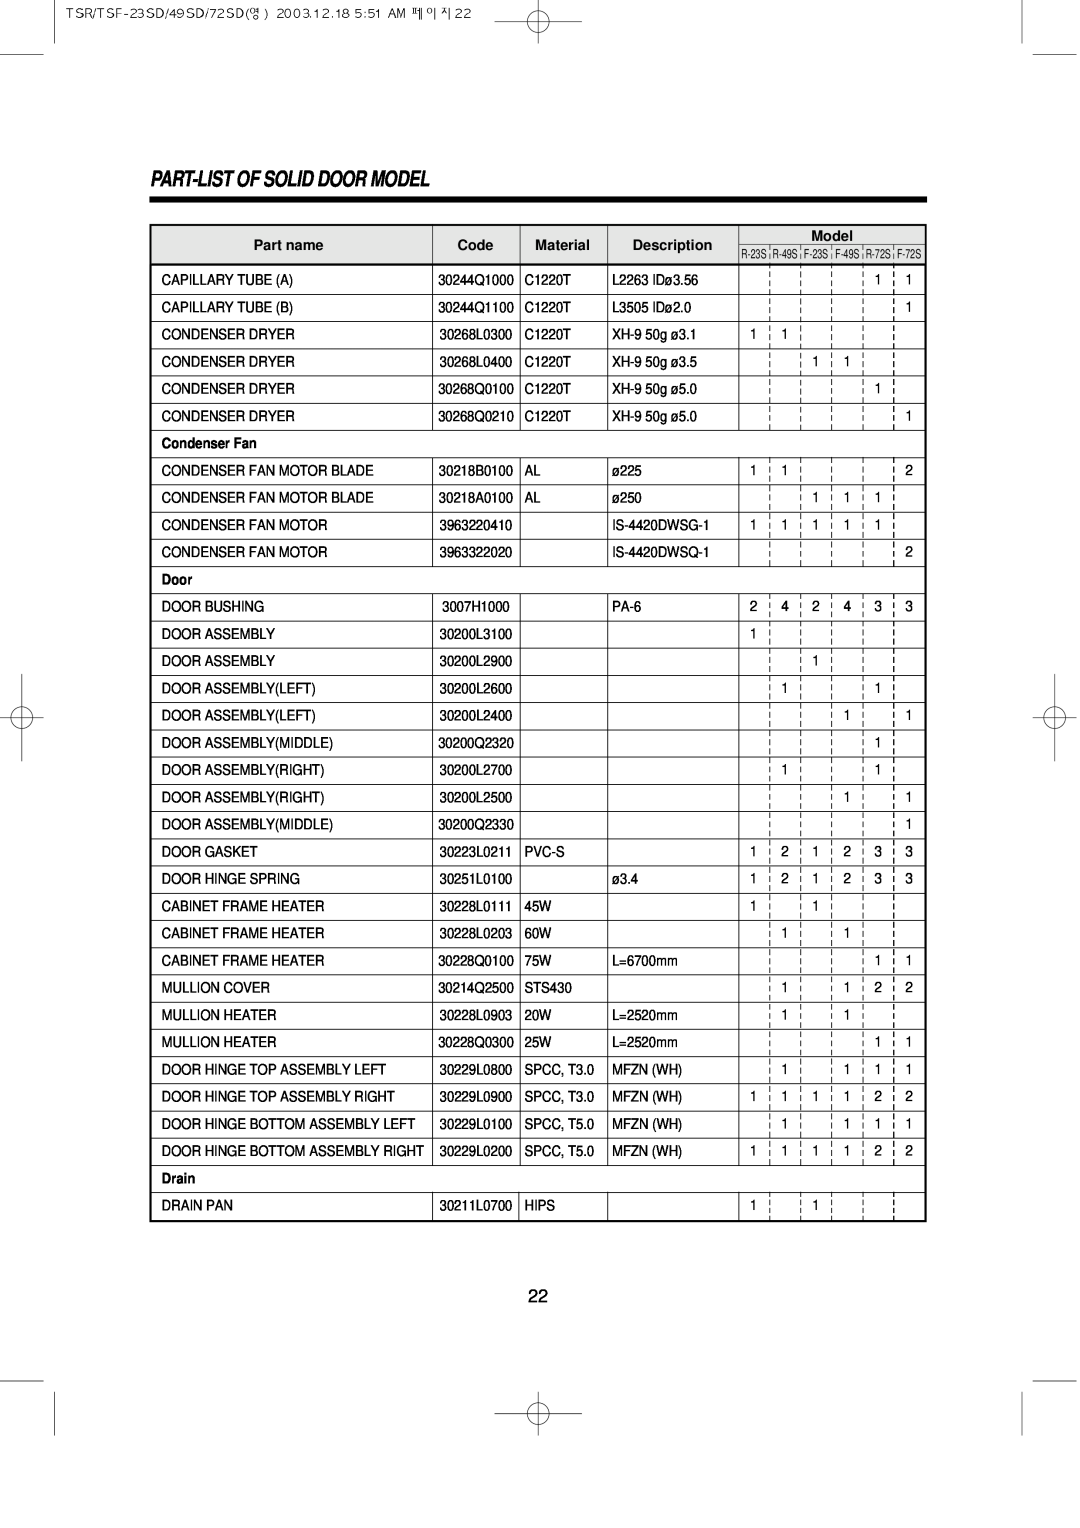 Turbo Air TSR-72SD, TSF-72SD Part-List Of Solid Door Model, Part name, Code, Material, Description, Condenser Fan, Drain 